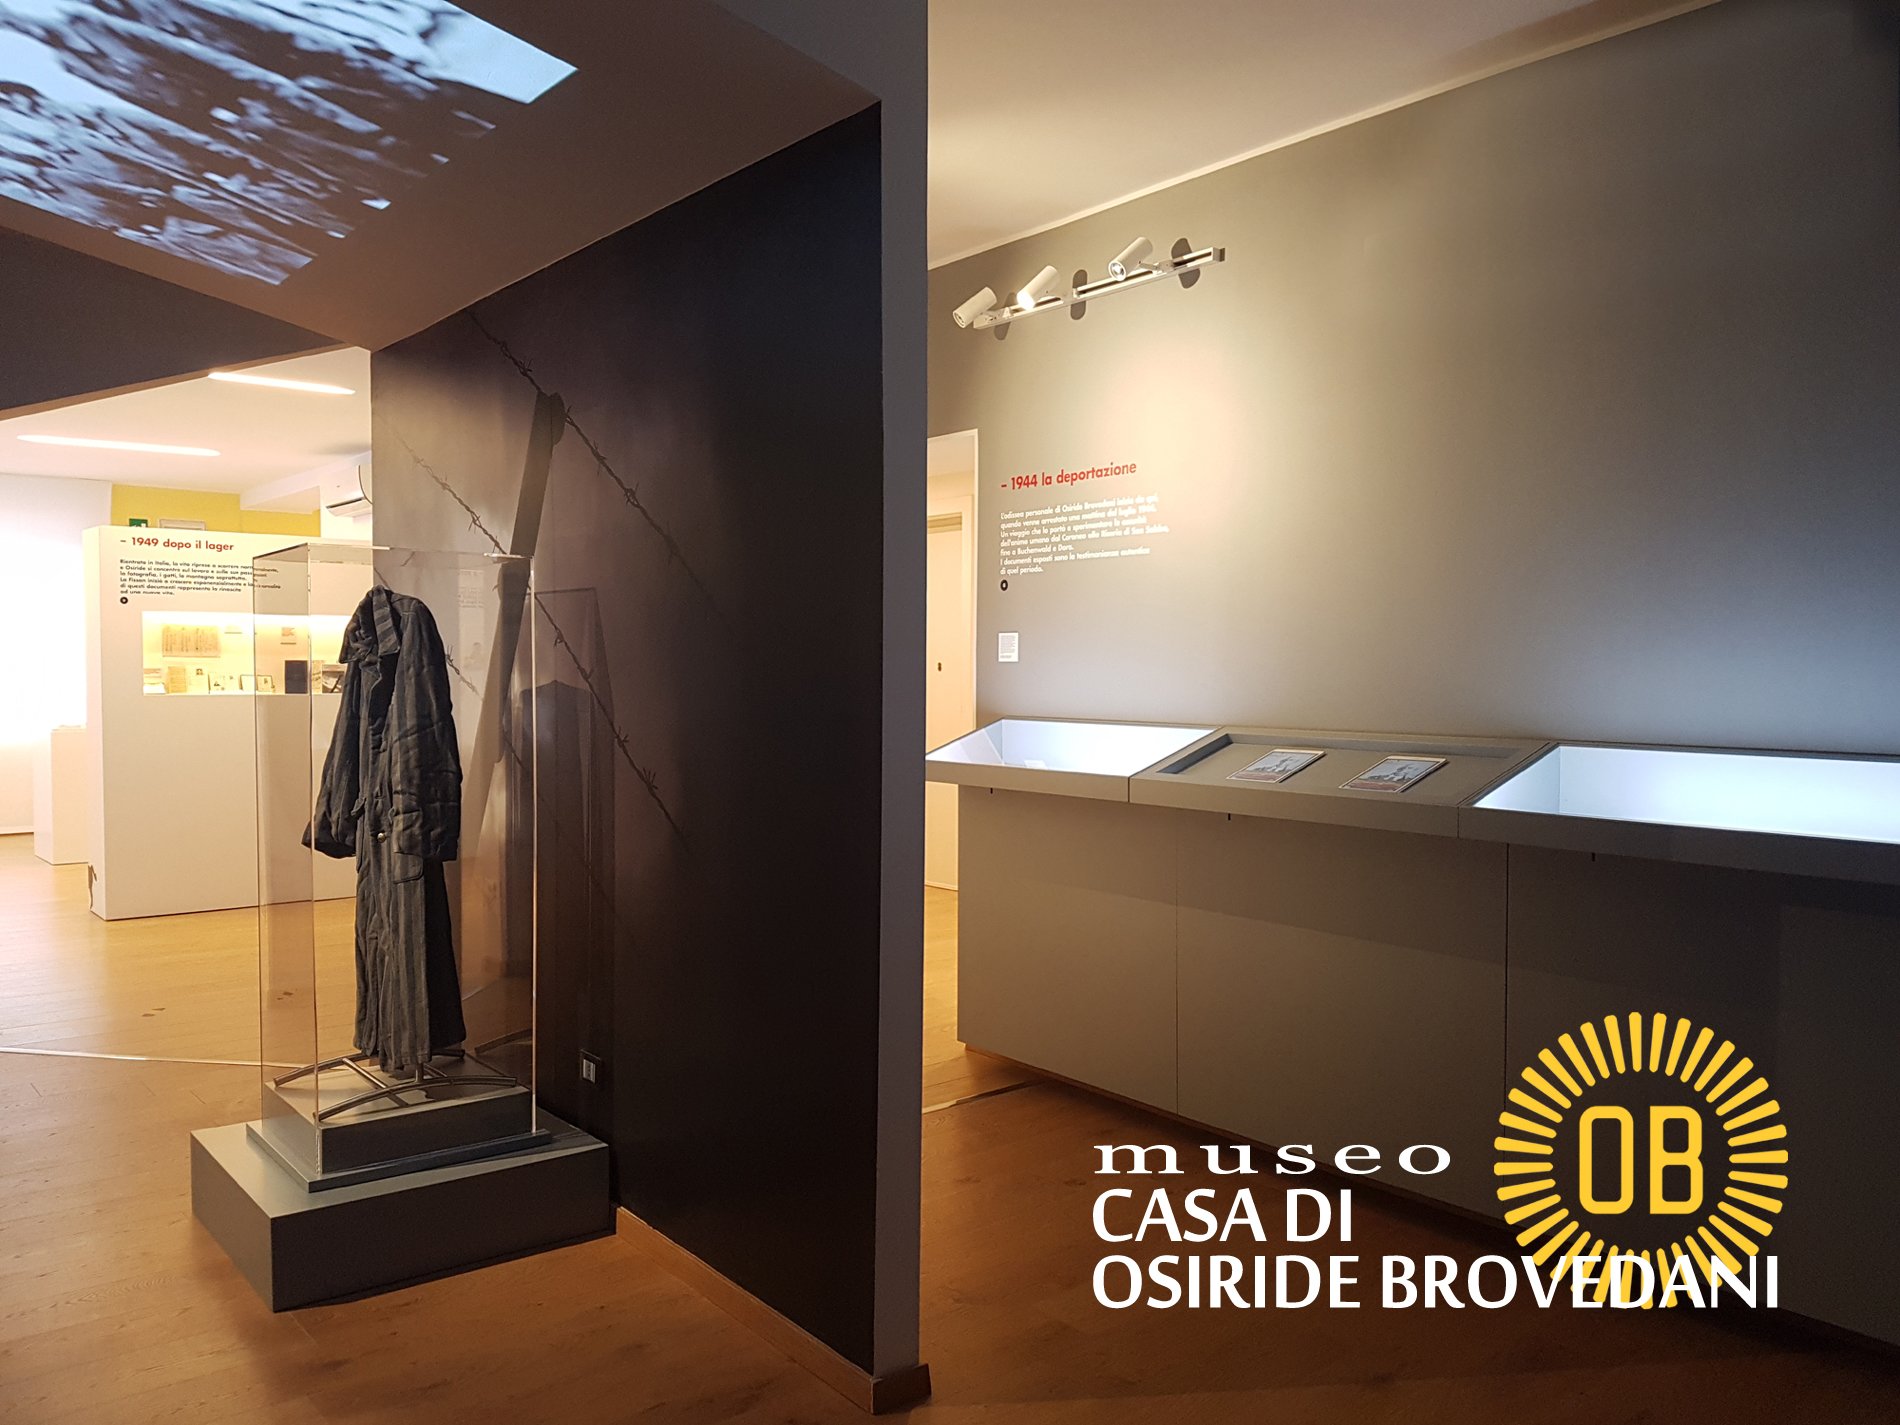 Museo Casa di Osiride Brovedani